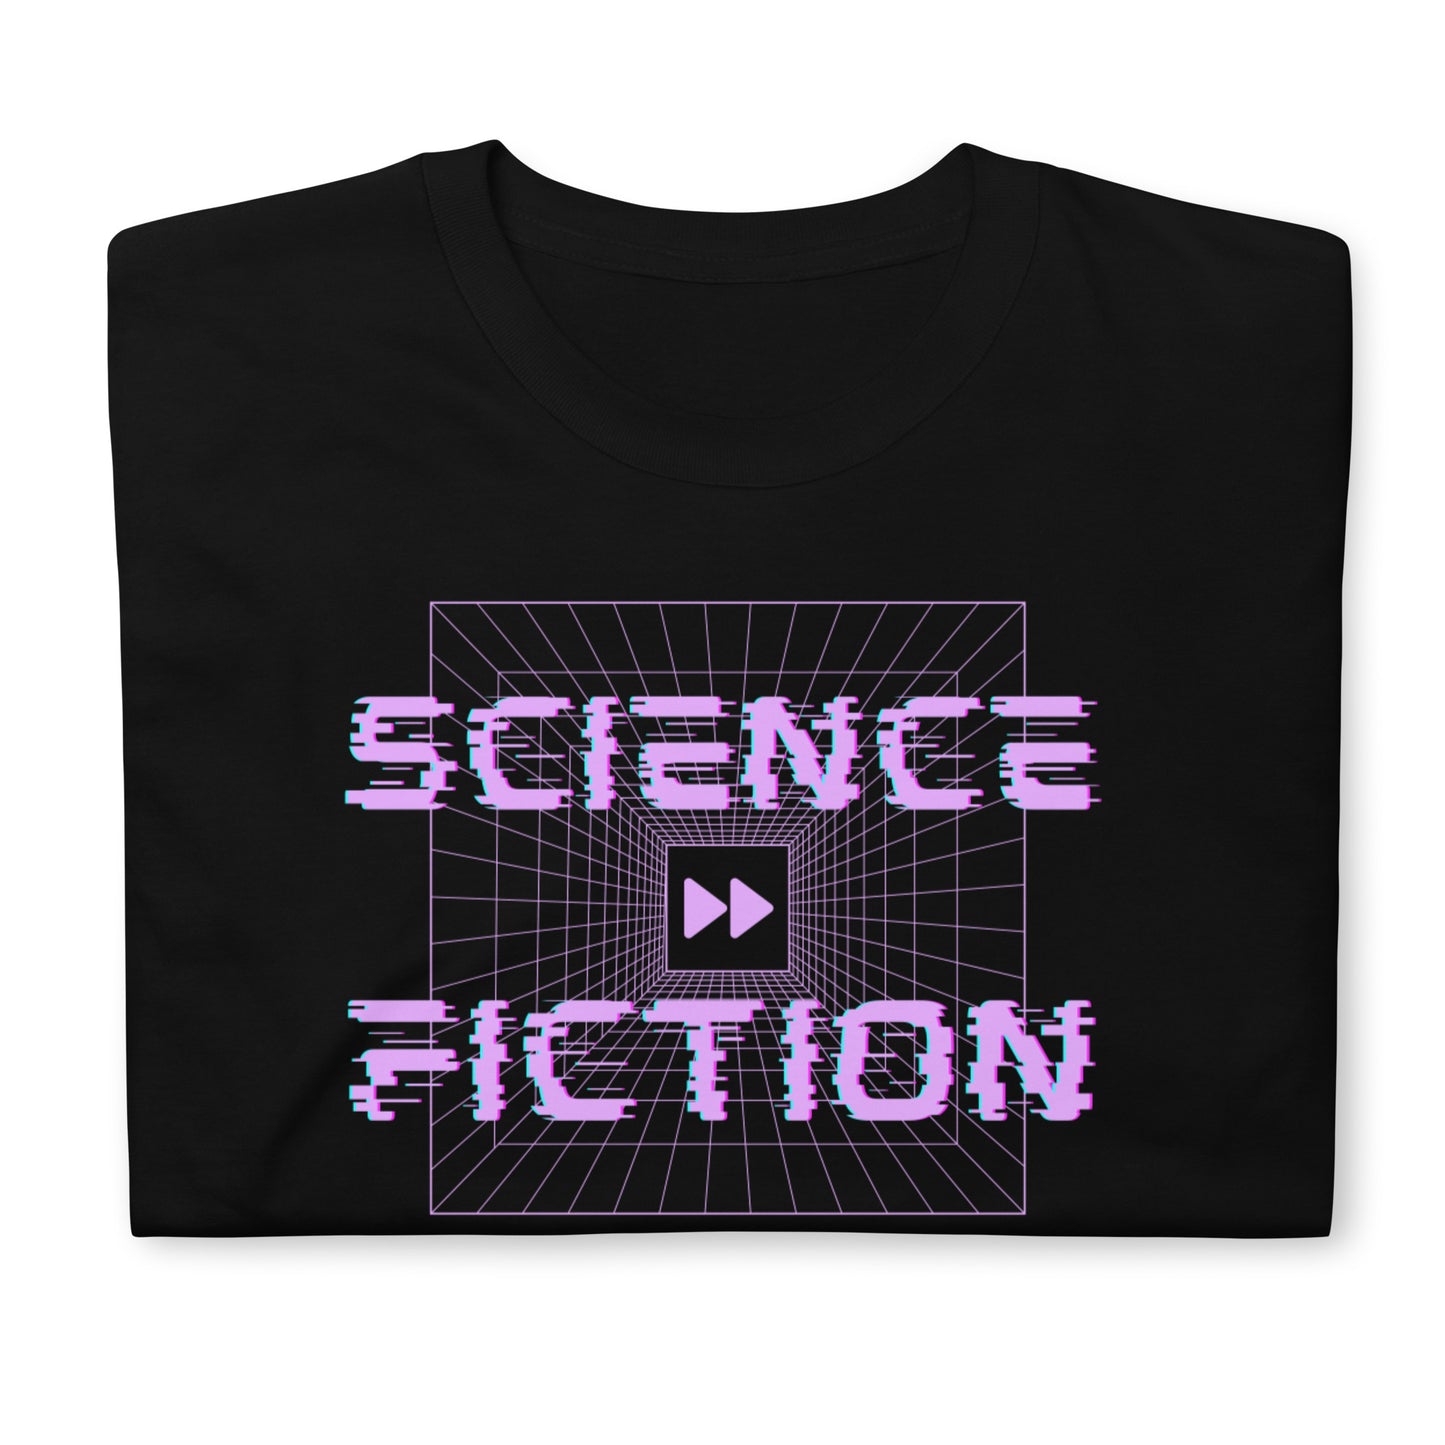 Science Fiction Fast Forward Short-Sleeve Unisex T-Shirt, Movie Lover, Film Lover, Cinephile